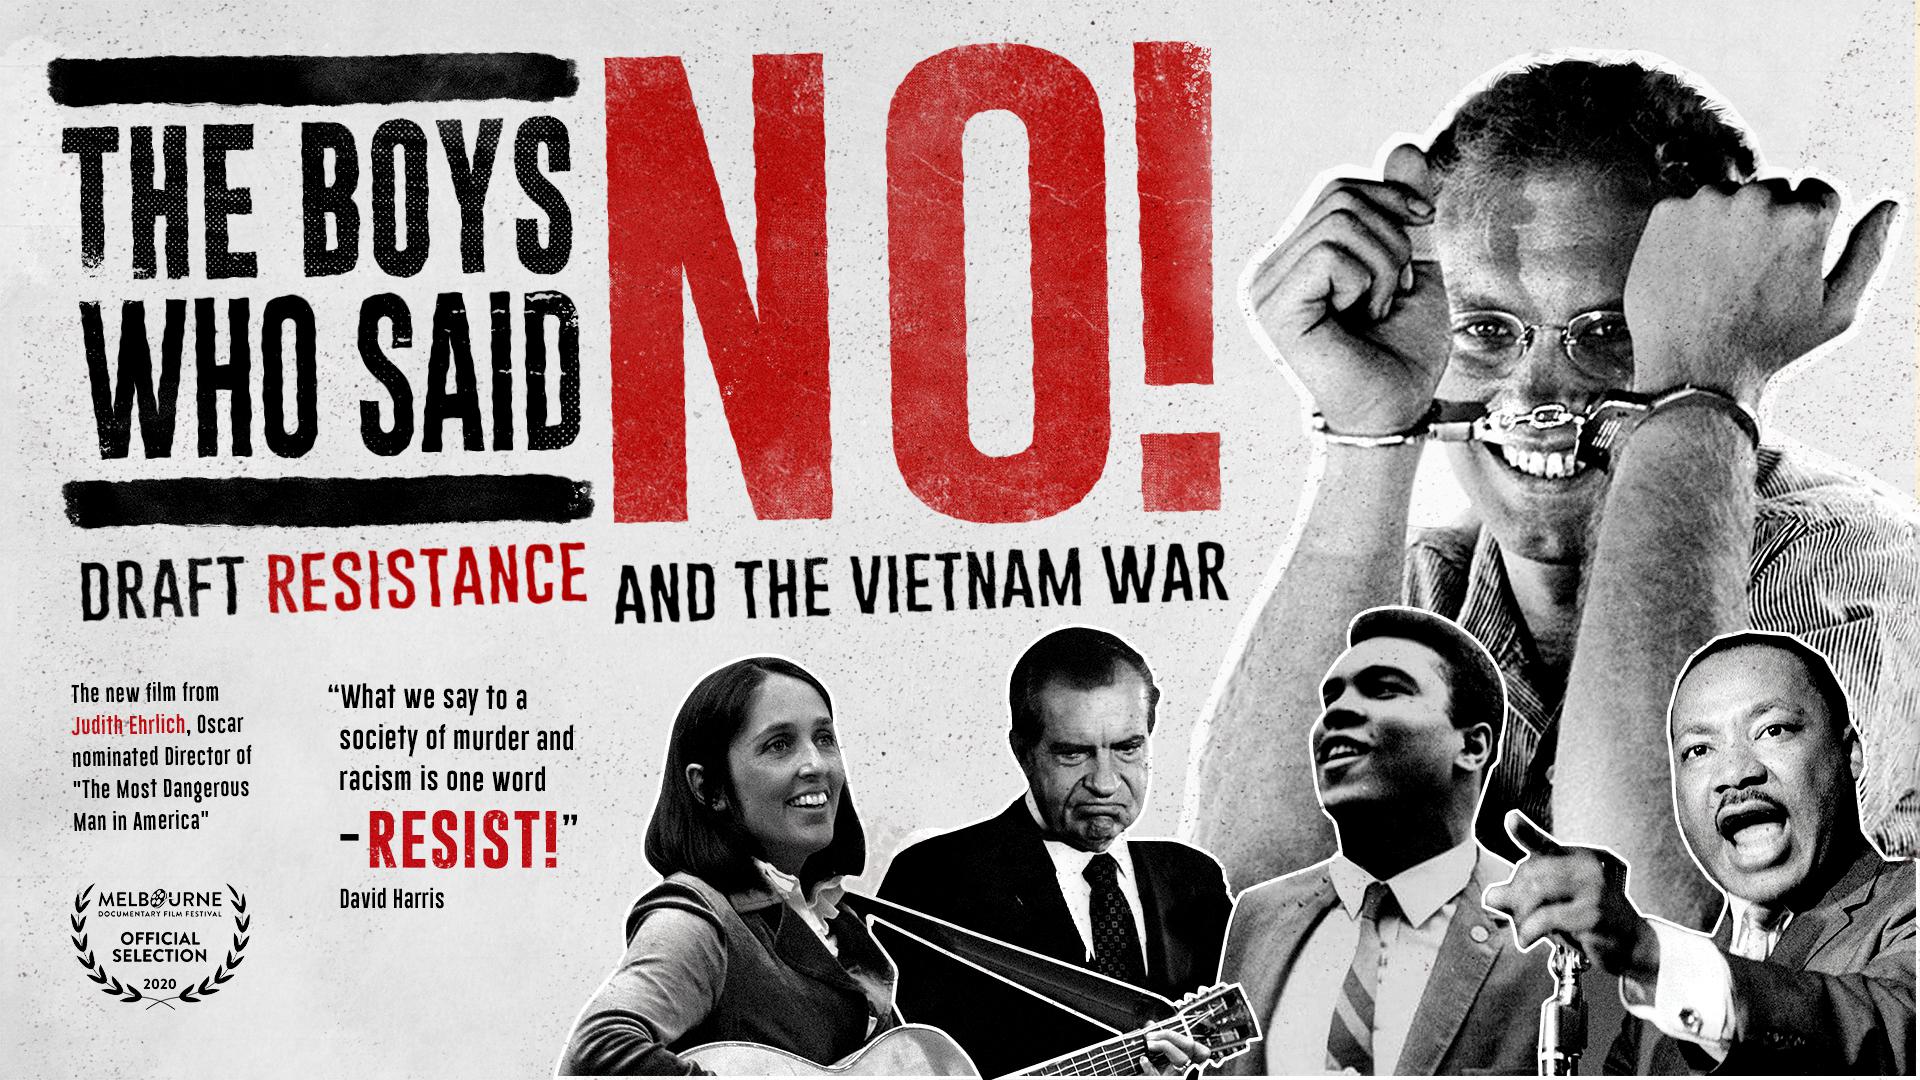 The Boys Who Said NO!